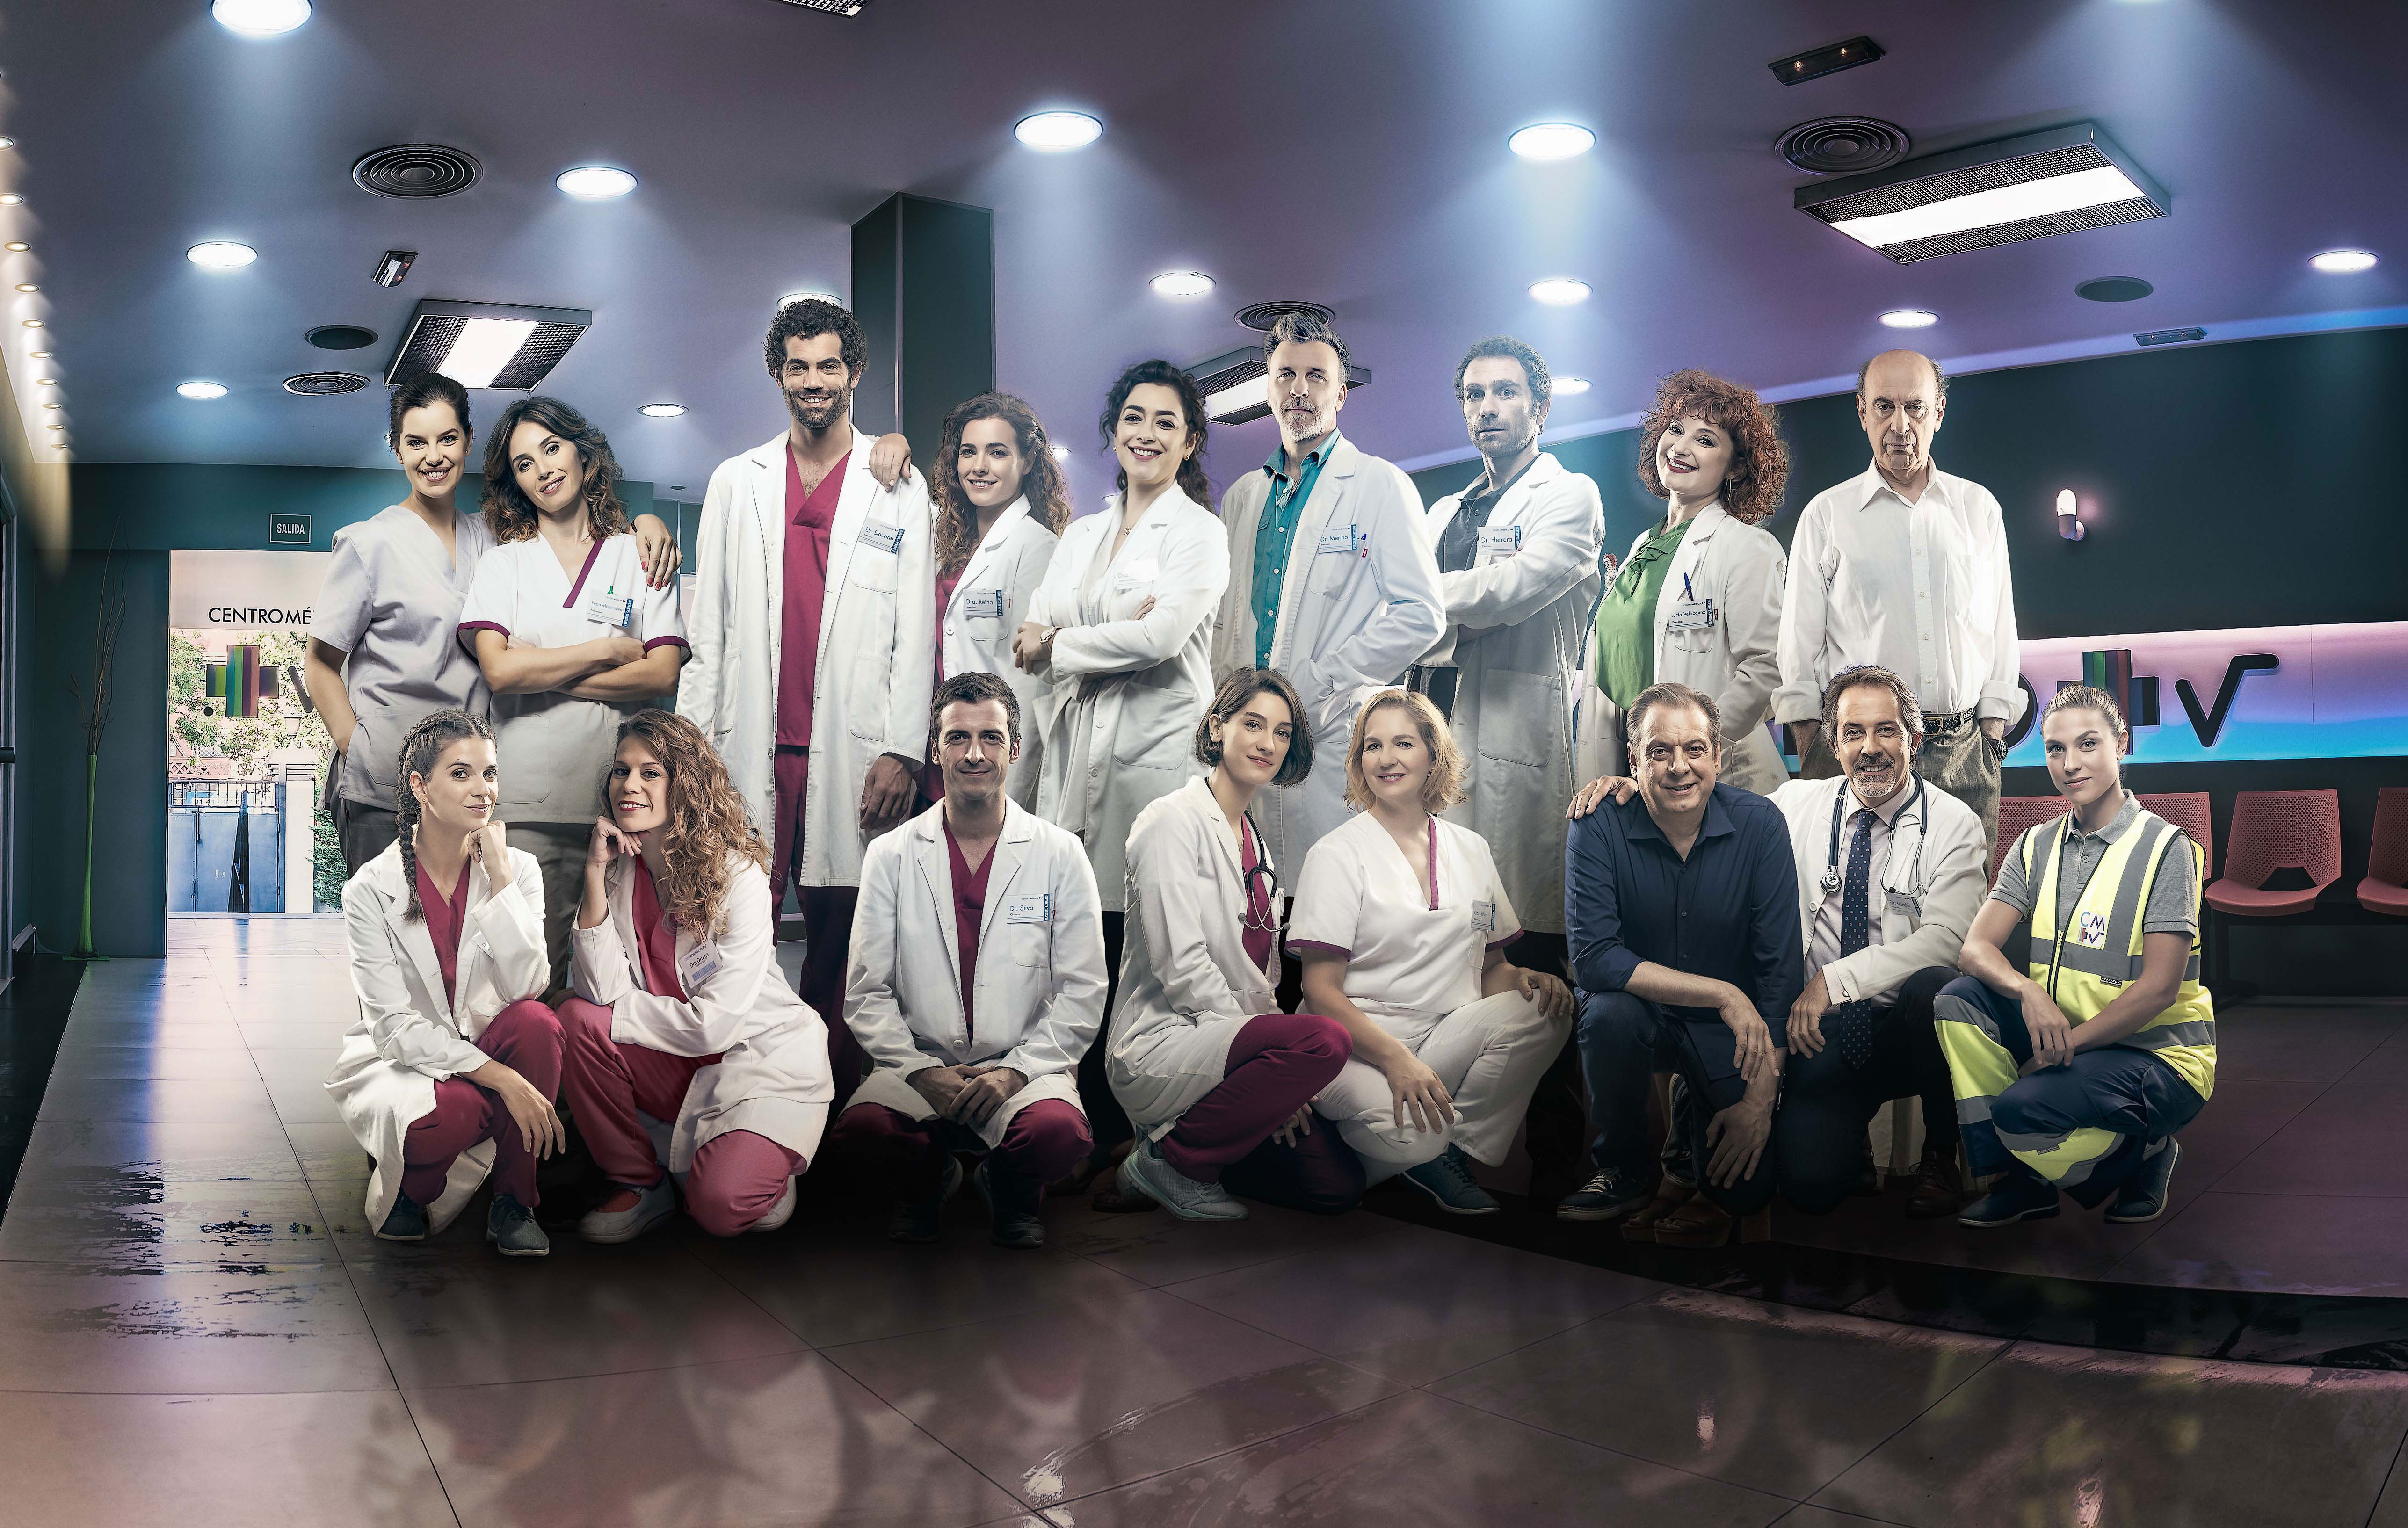 Centro medico enters the “1000 episodes club”